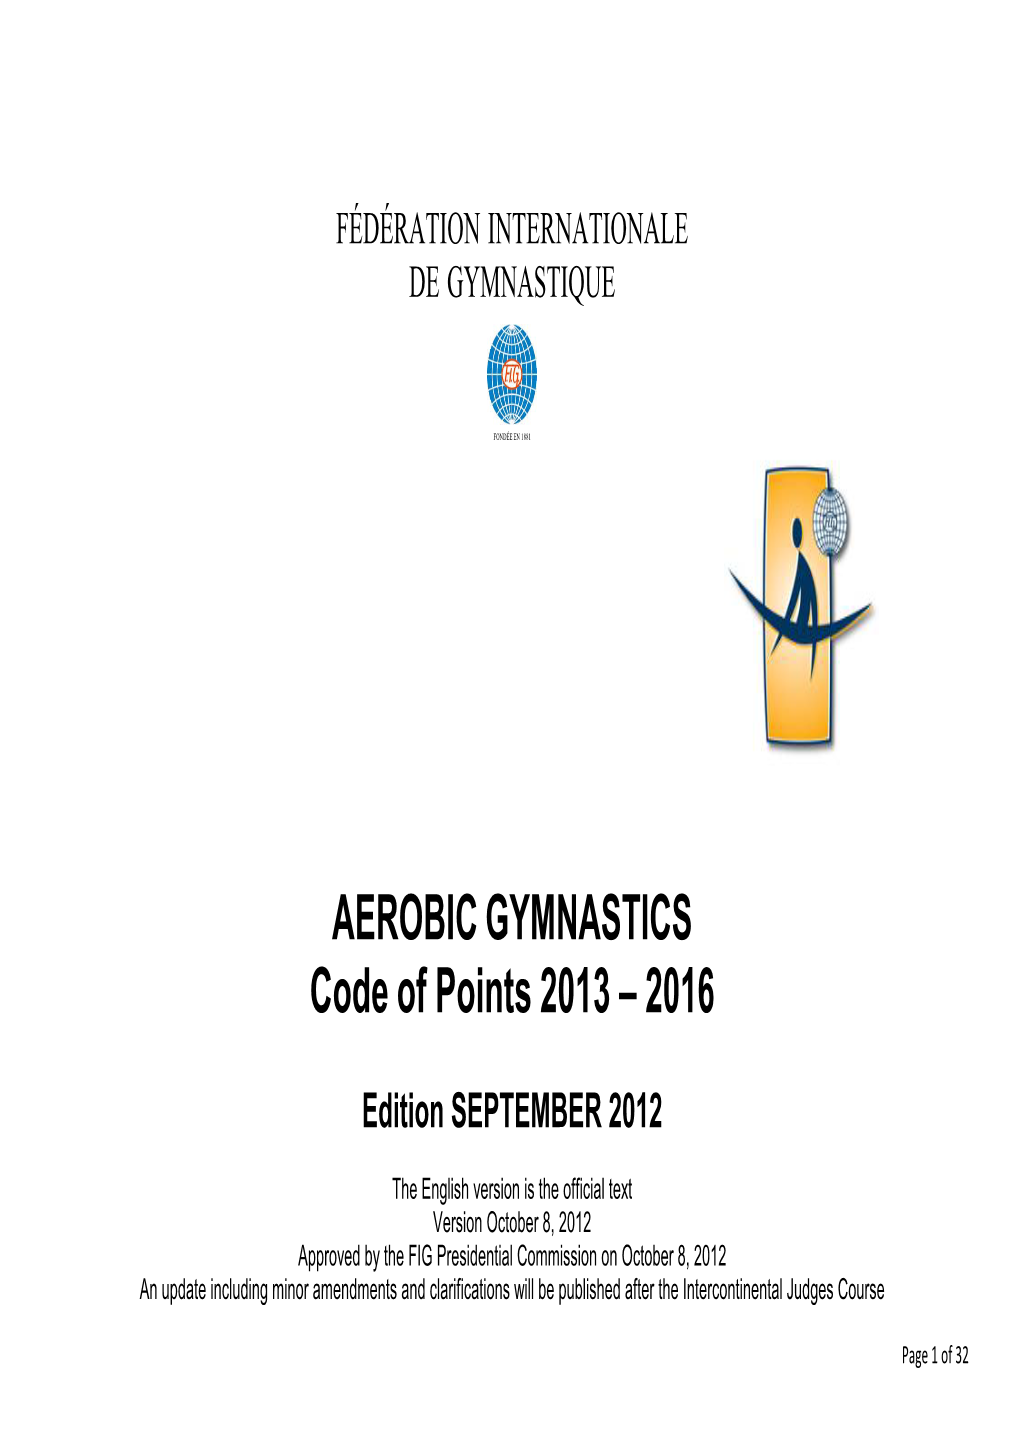 AEROBIC GYMNASTICS Code of Points 2013 – 2016